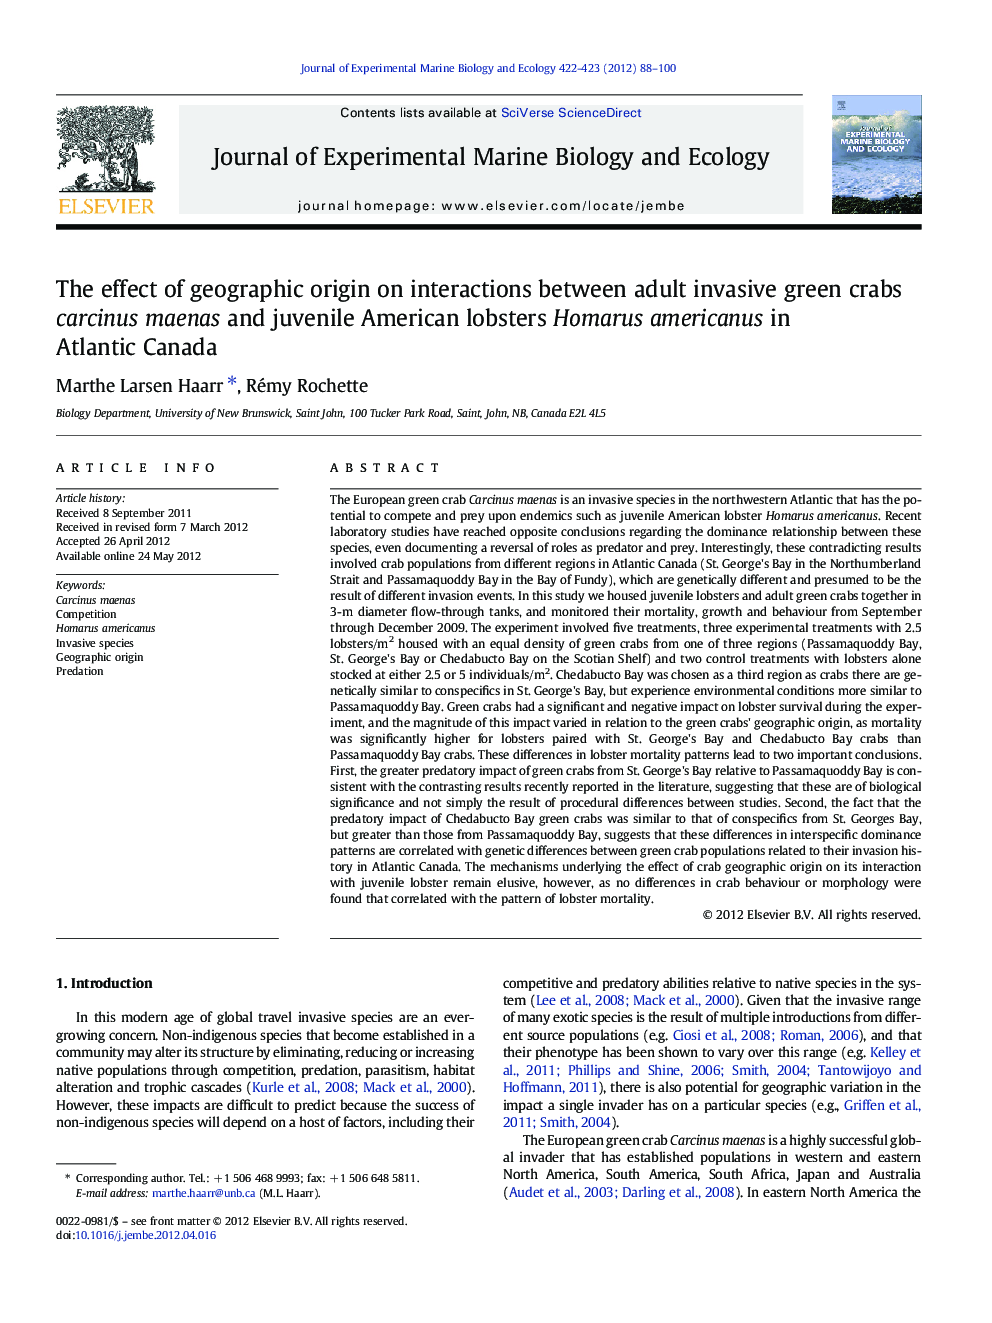 The effect of geographic origin on interactions between adult invasive green crabs carcinus maenas and juvenile American lobsters Homarus americanus in Atlantic Canada